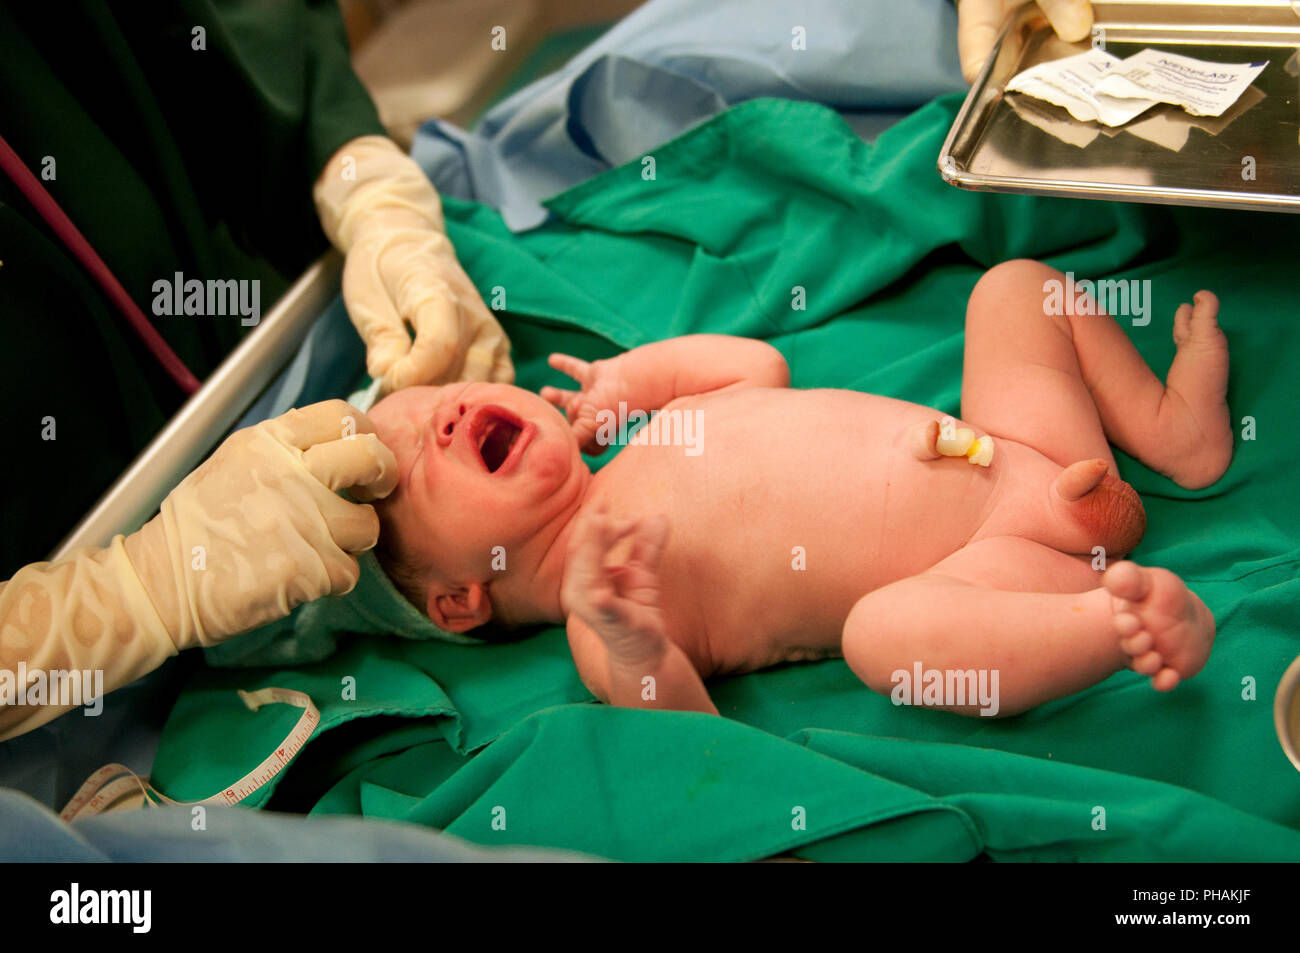 Baby Just Born With Cut Umbilical Cord Bebe Nouveau Ne Avec Cordon Ombilical Coupe Stock Photo Alamy